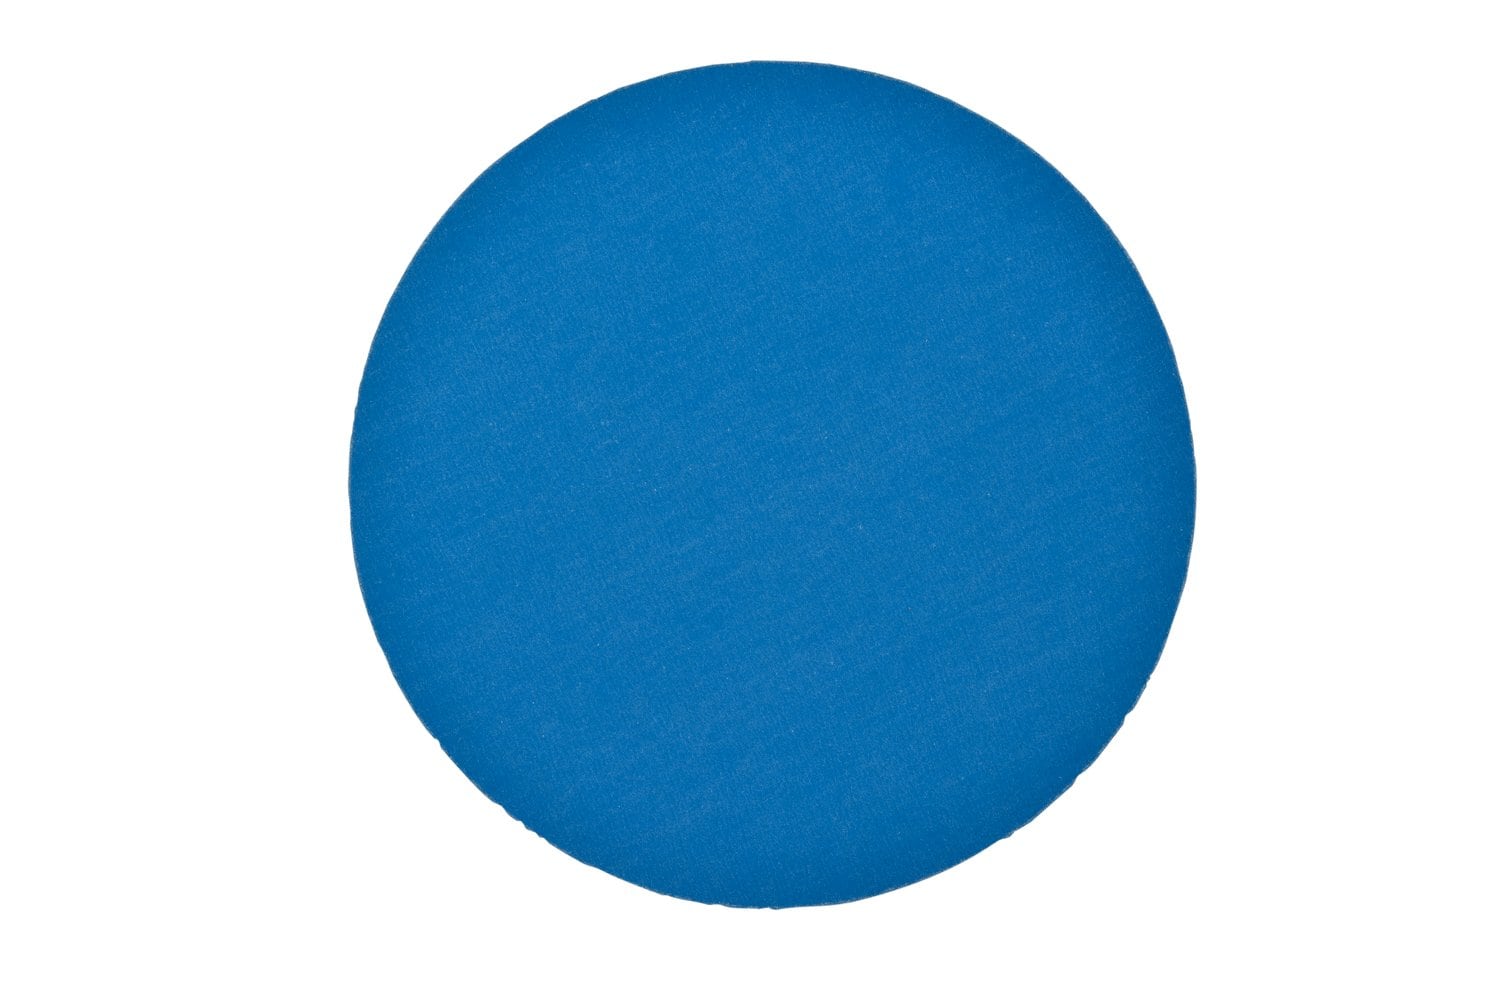 7100199662 - 3M Hookit Blue Abrasive Disc, 36251, 6 in, 800 grade, No Hole, 50 discs per carton, 4 cartons per case